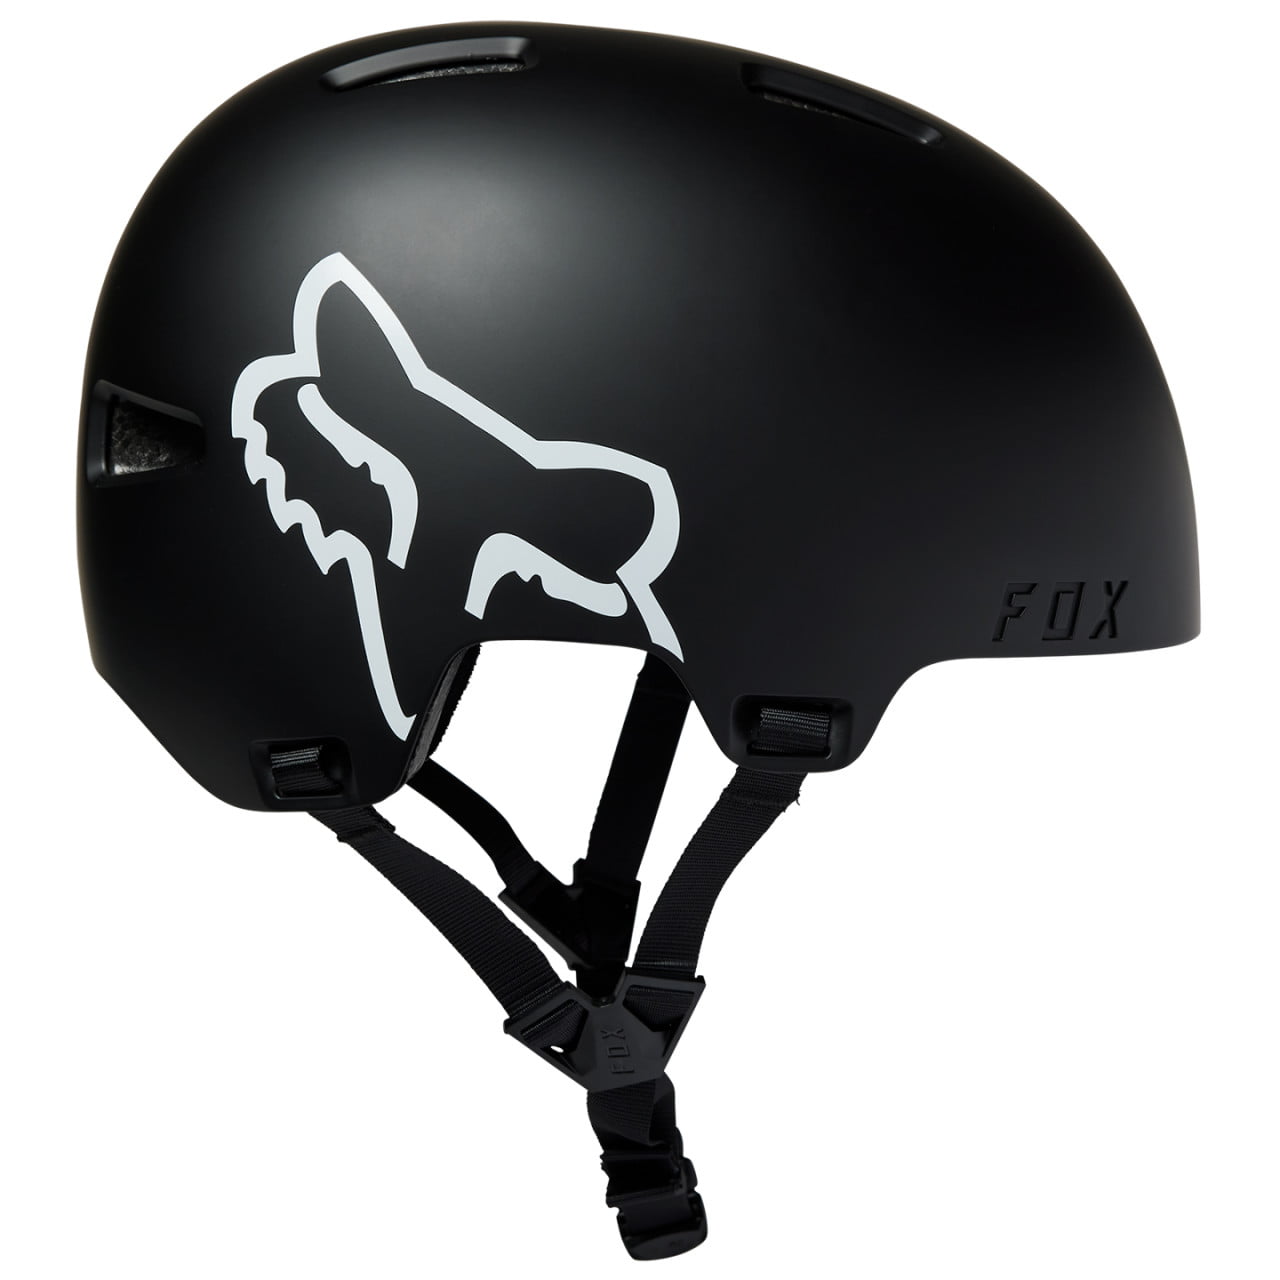 Flight bike helmet